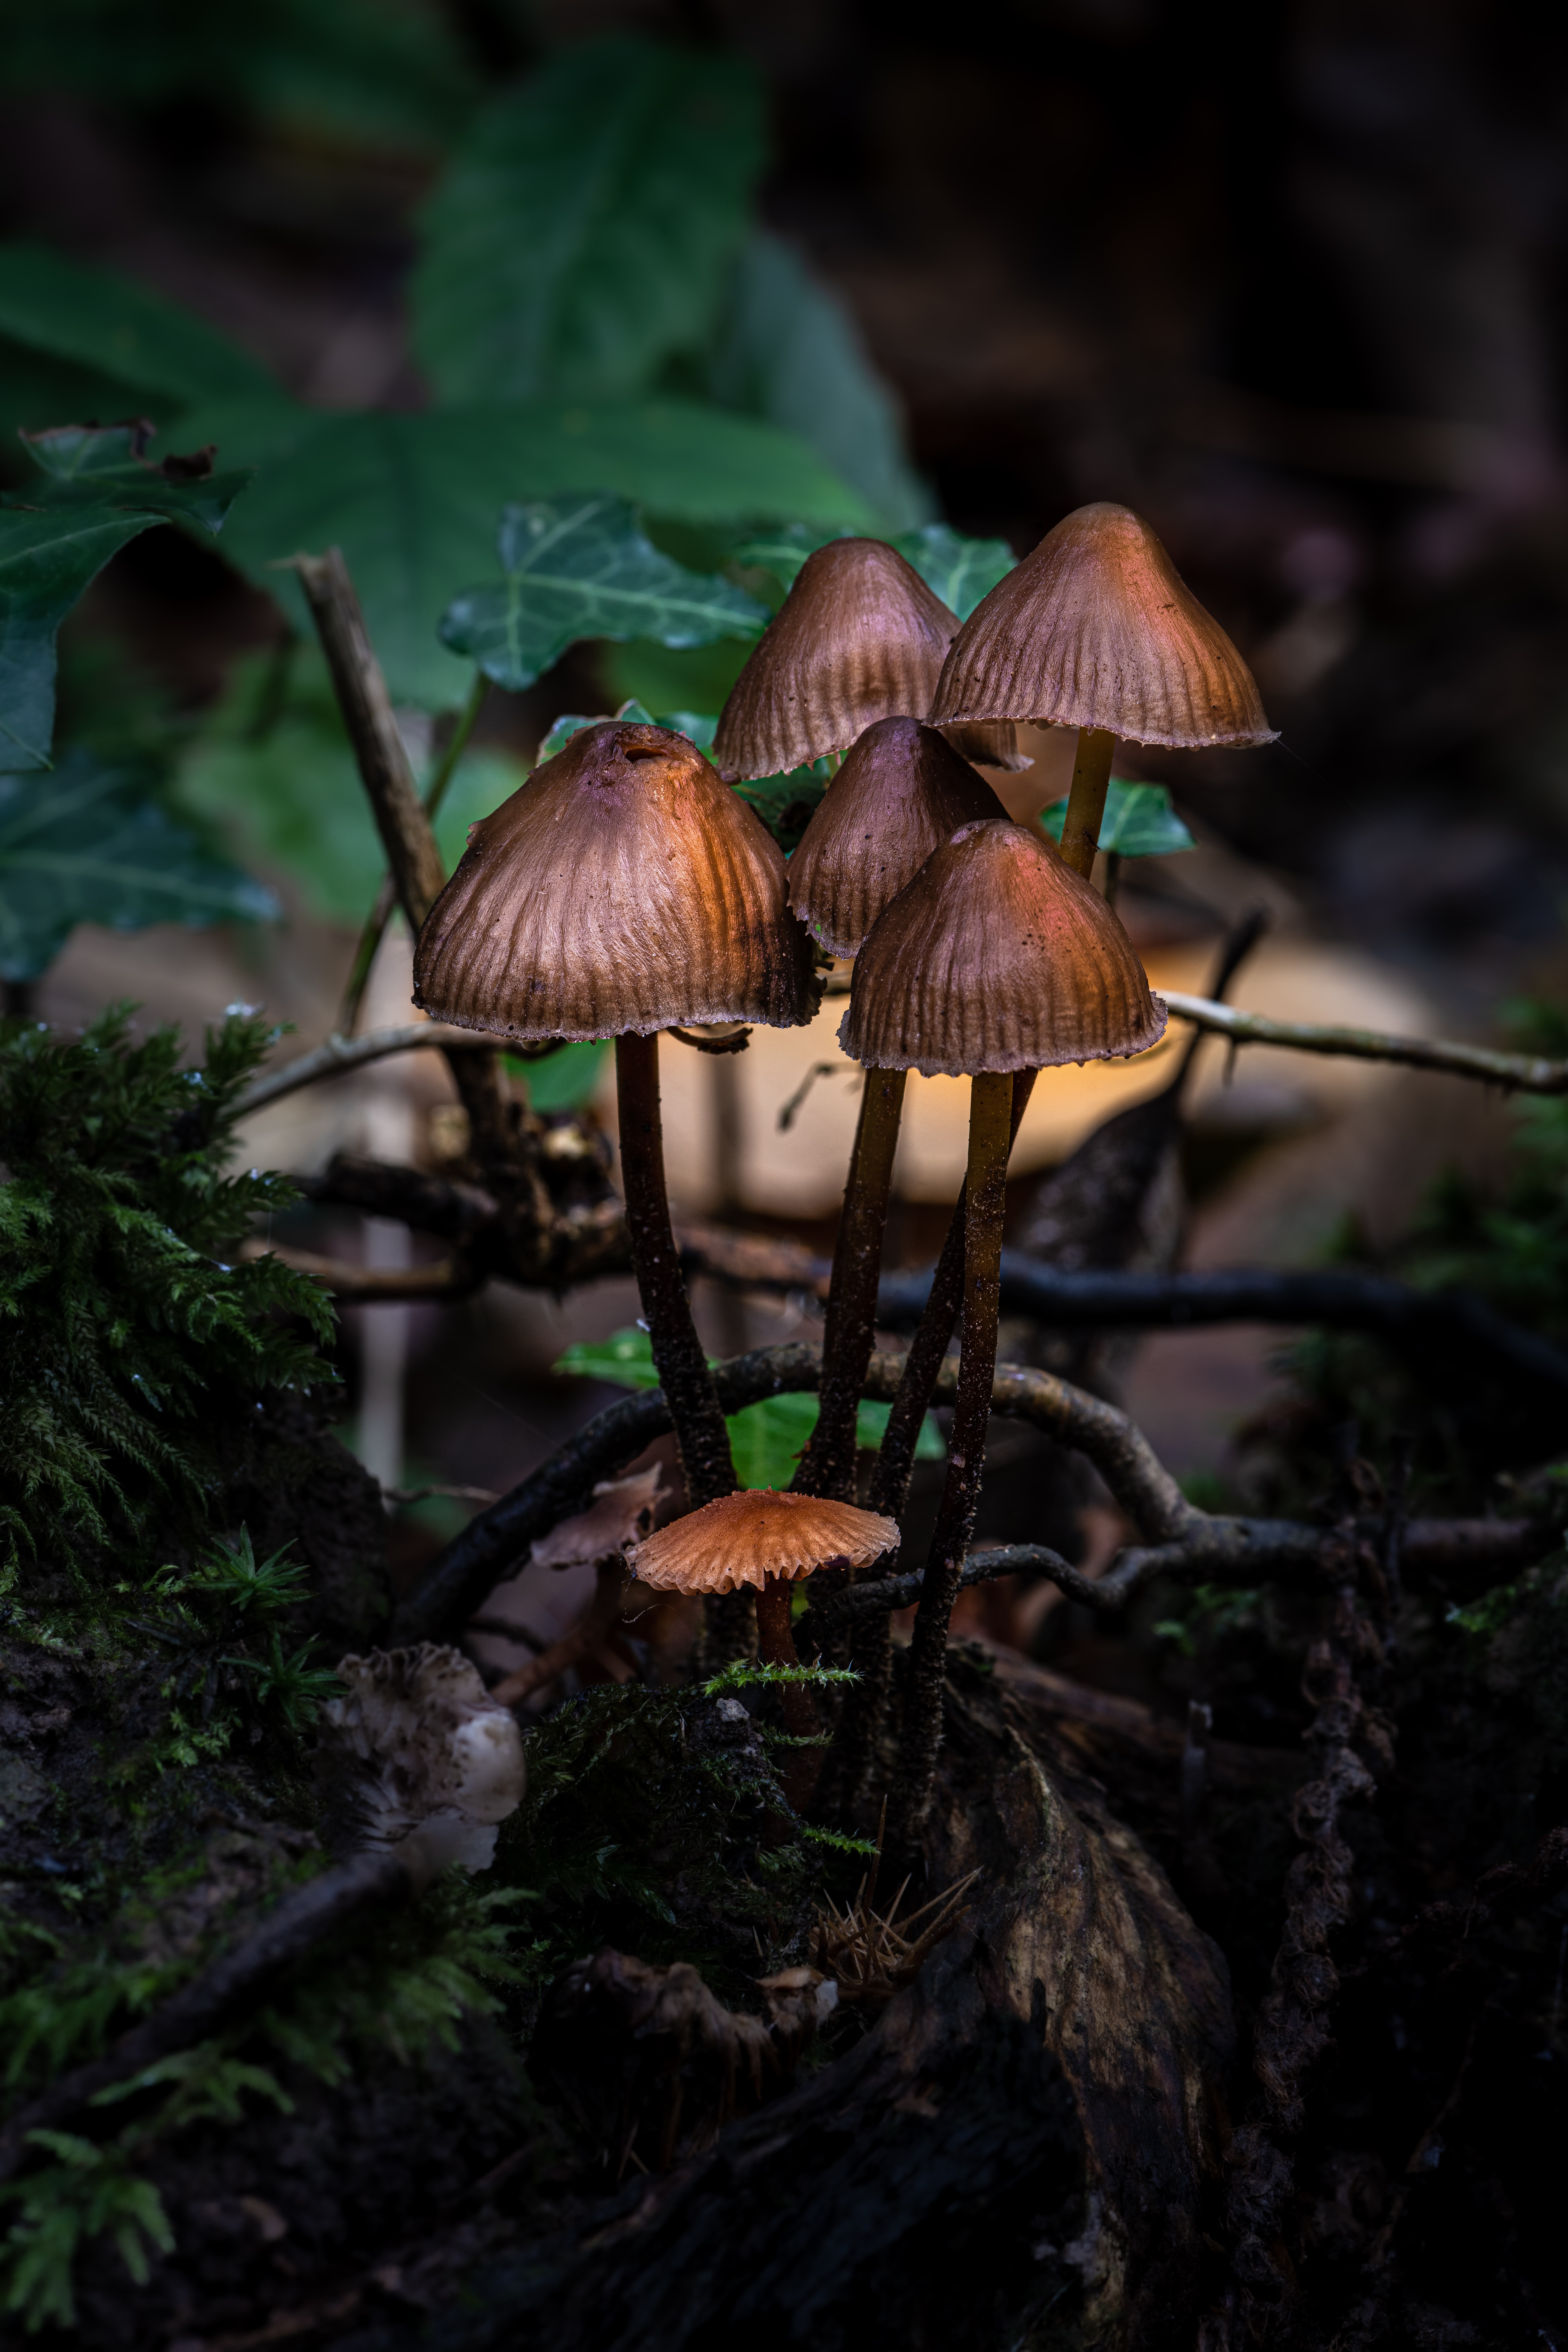 jez-timms-Mushrooms in woody patch-unsplash